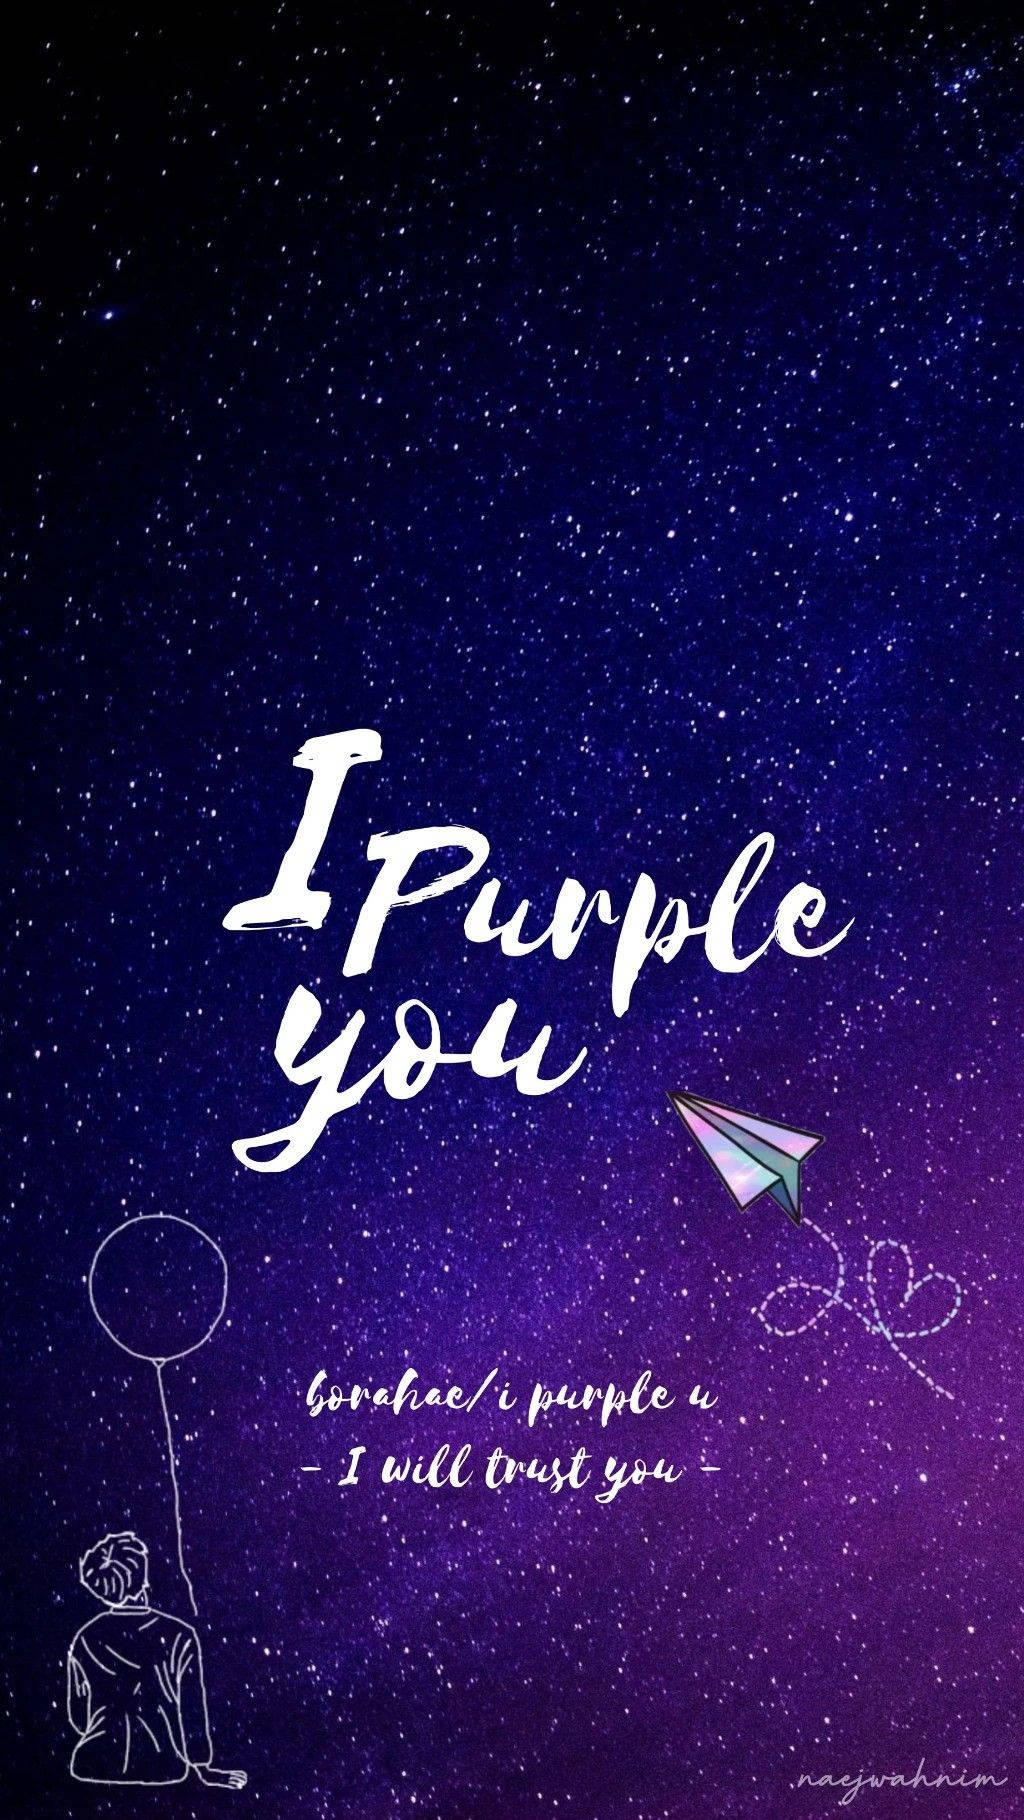 Borahae Pastel Purple Galaxy Theme Background